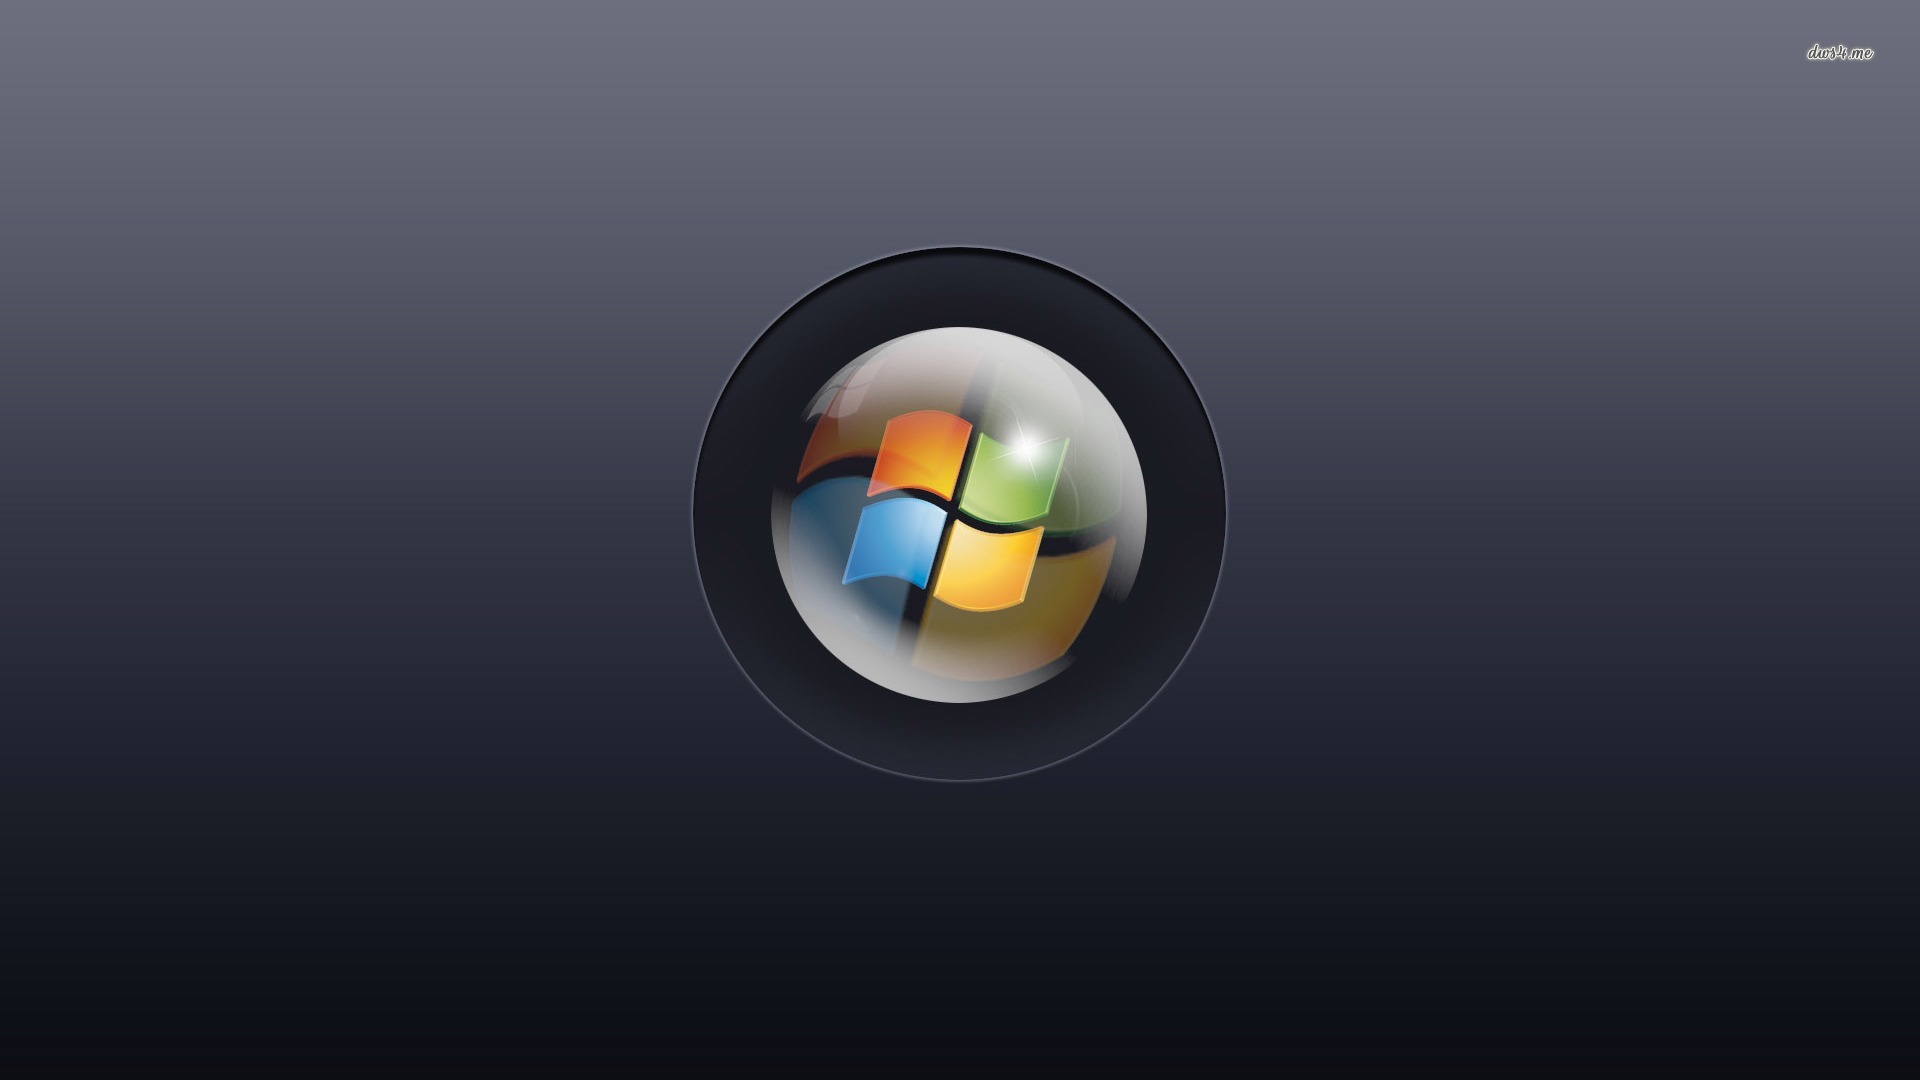 Wallpaper Windows 7 3d Full Hd Image Num 95